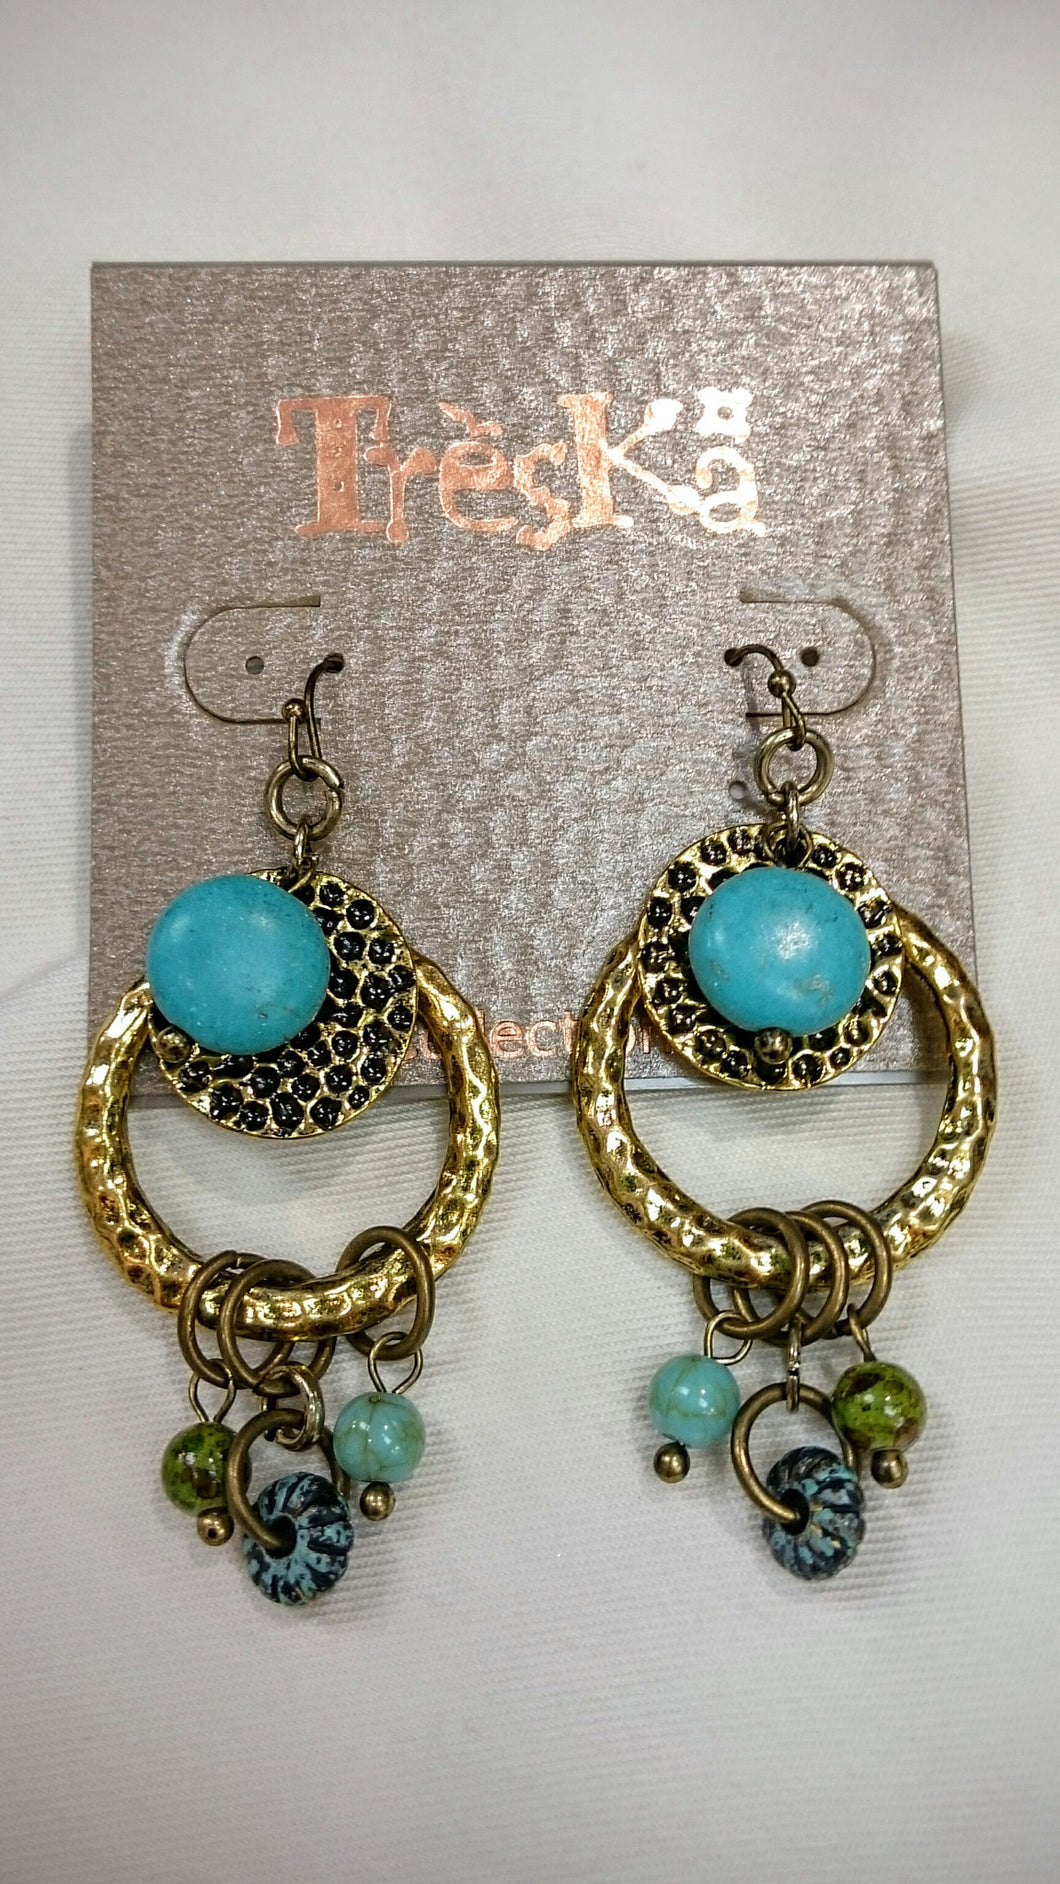 Treska | San Collection Earrings